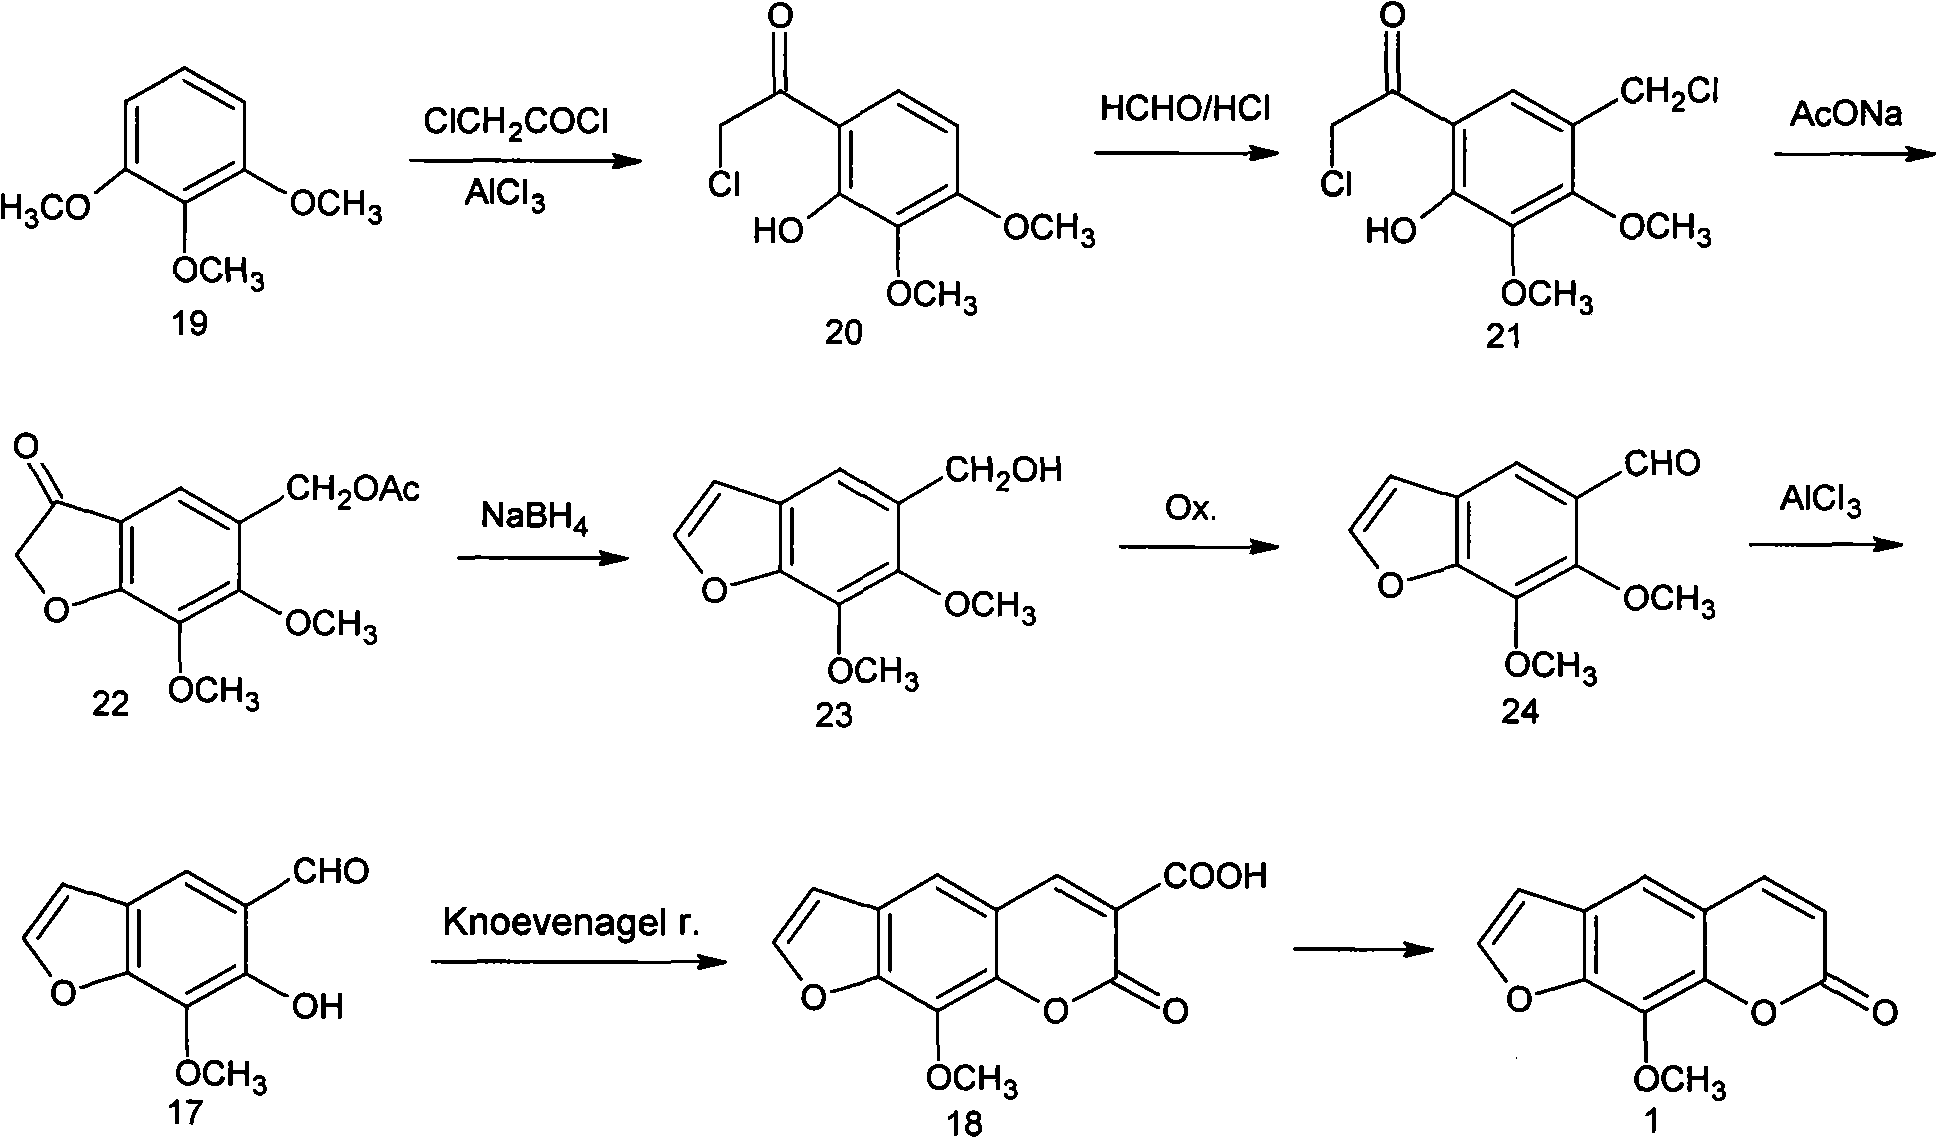 Synthesis process of methoxsalen